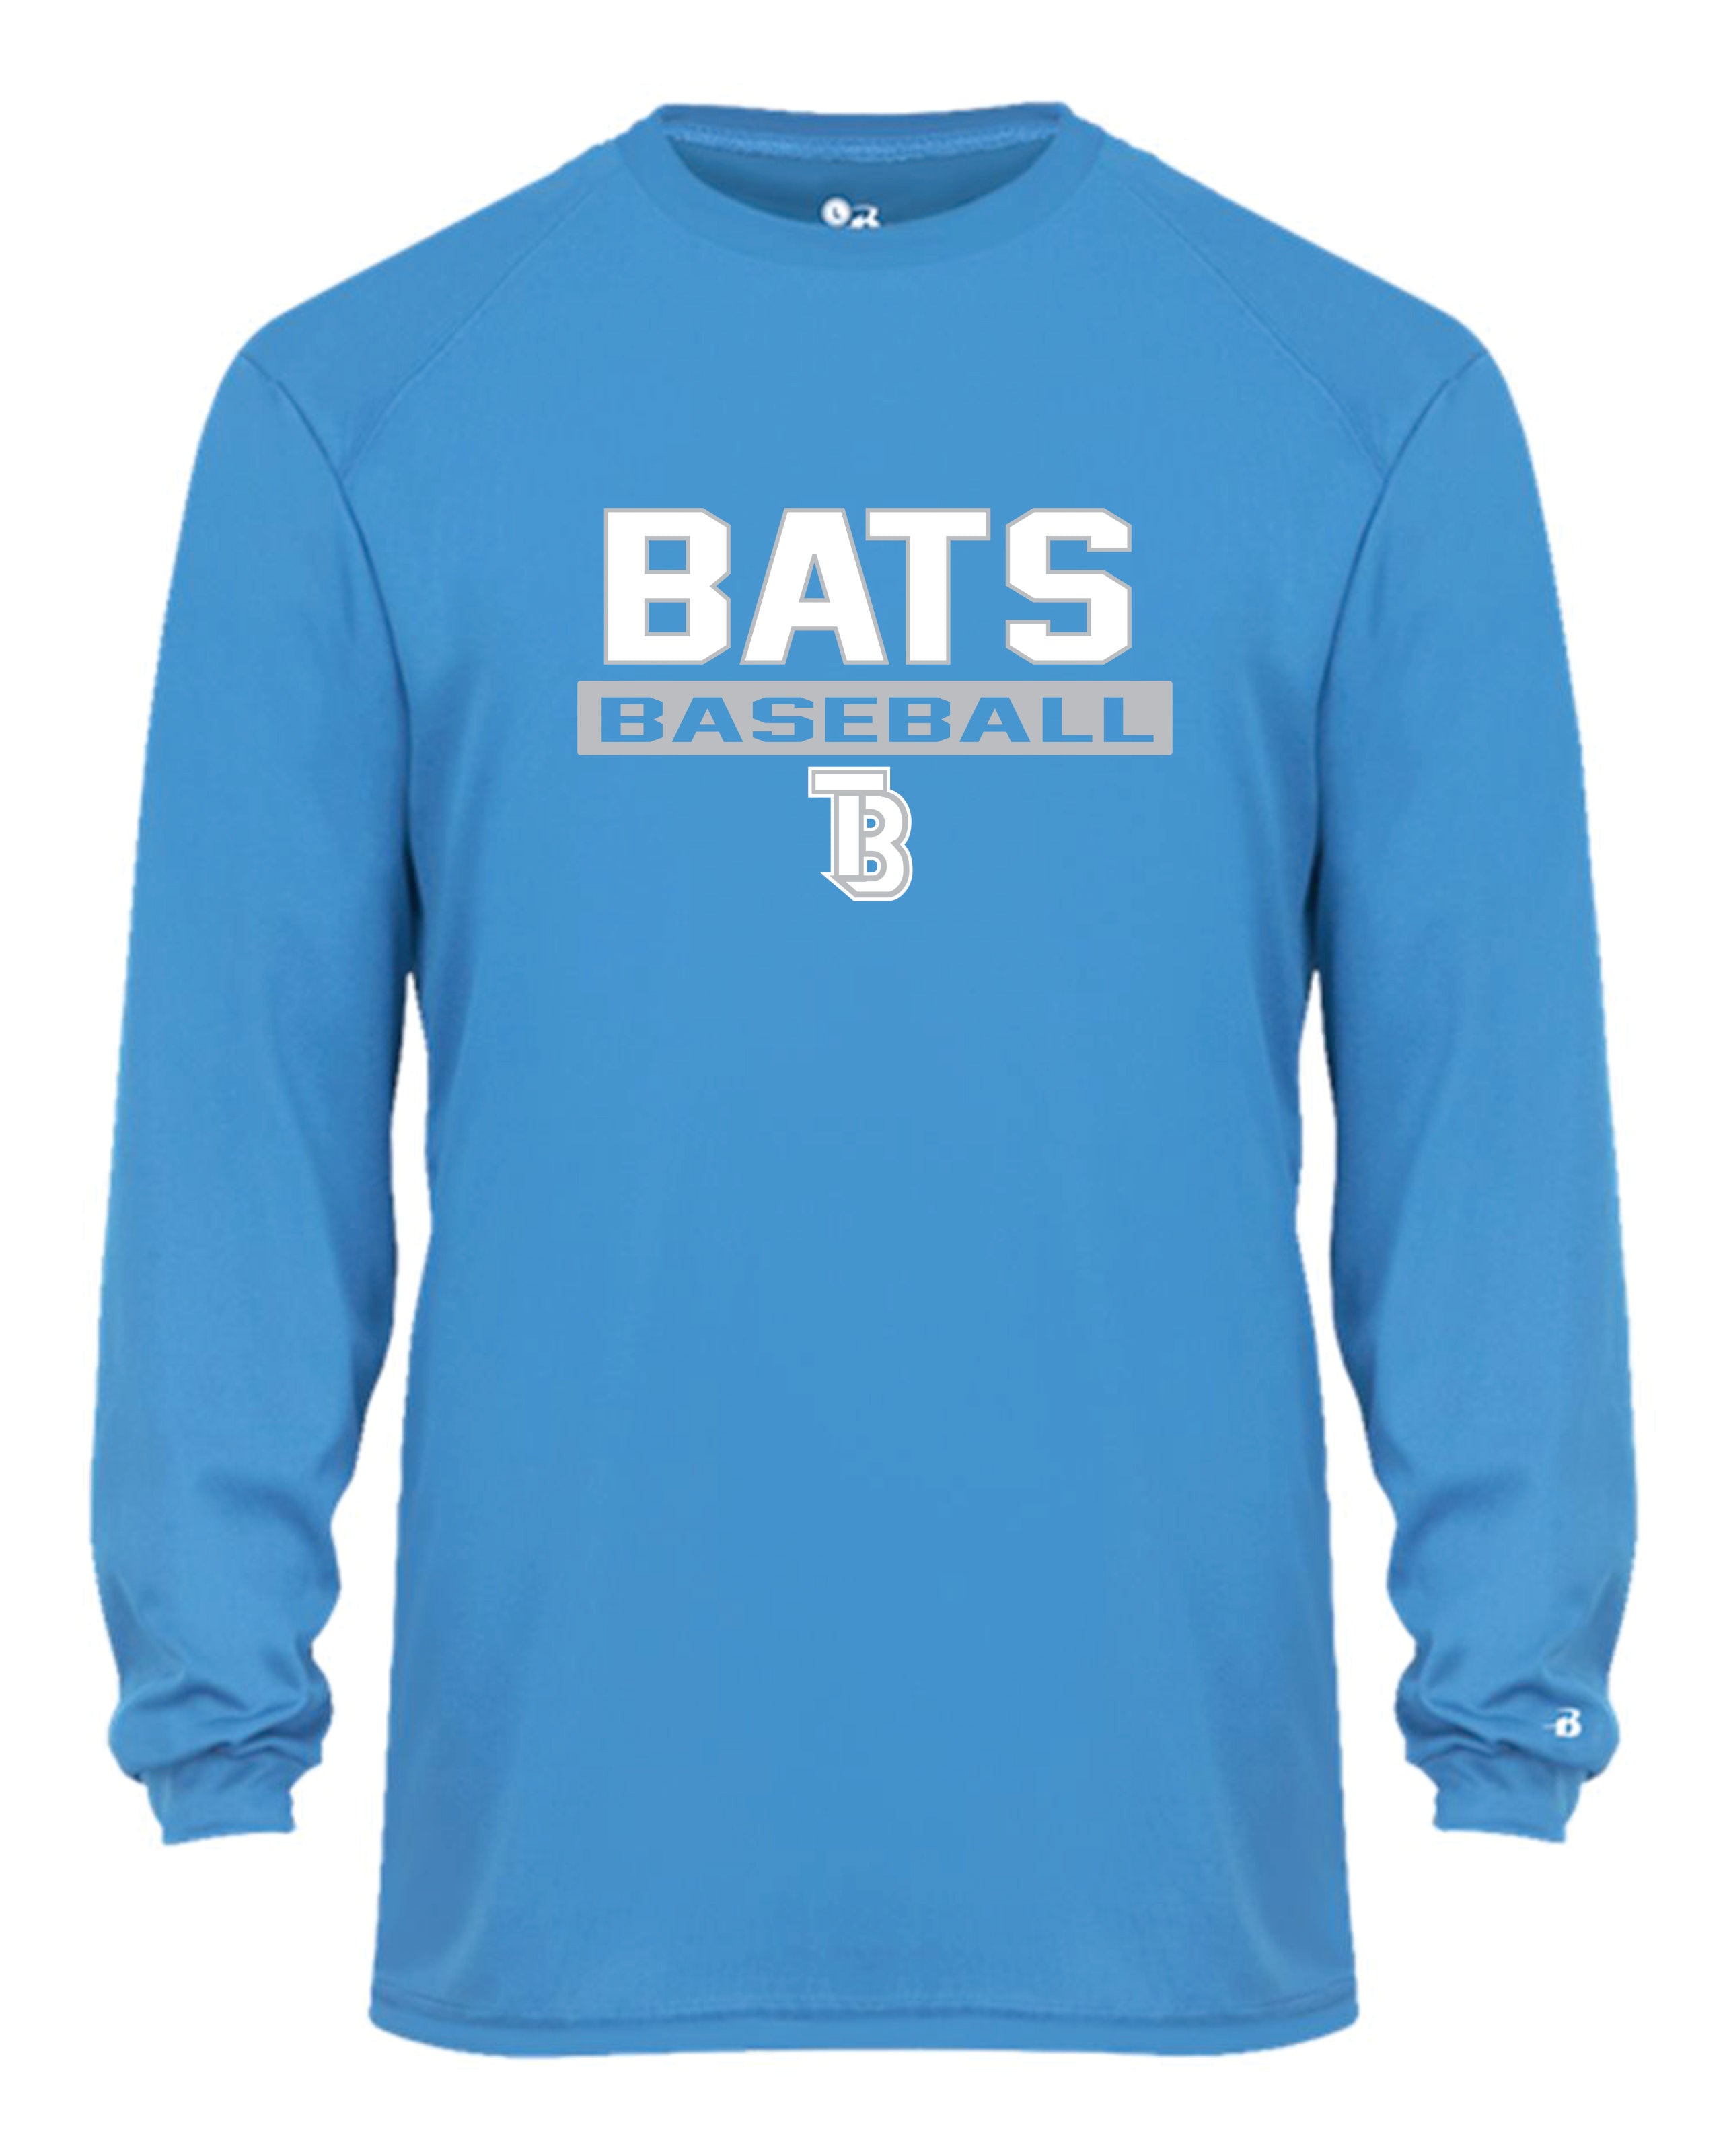 Tampa Bay Bats Long Sleeve Badger Dri Fit Shirt - Women